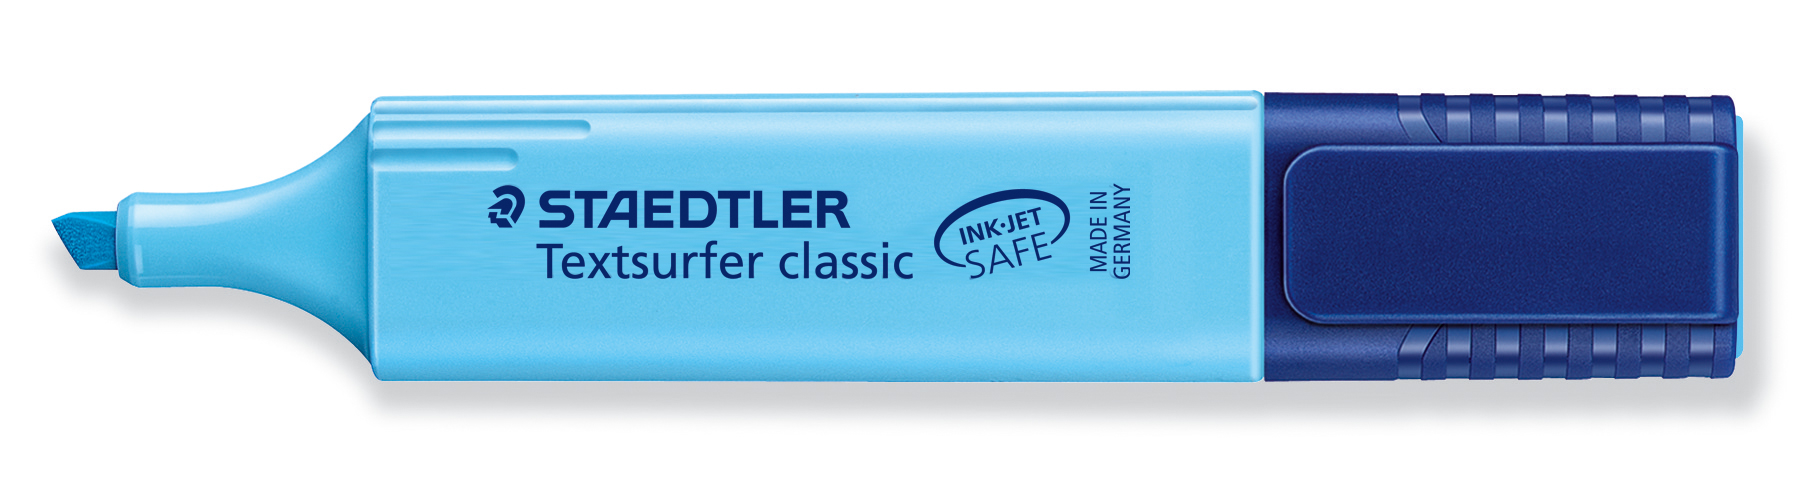 STAEDTLER Textsurfer Classic 364-3 blau